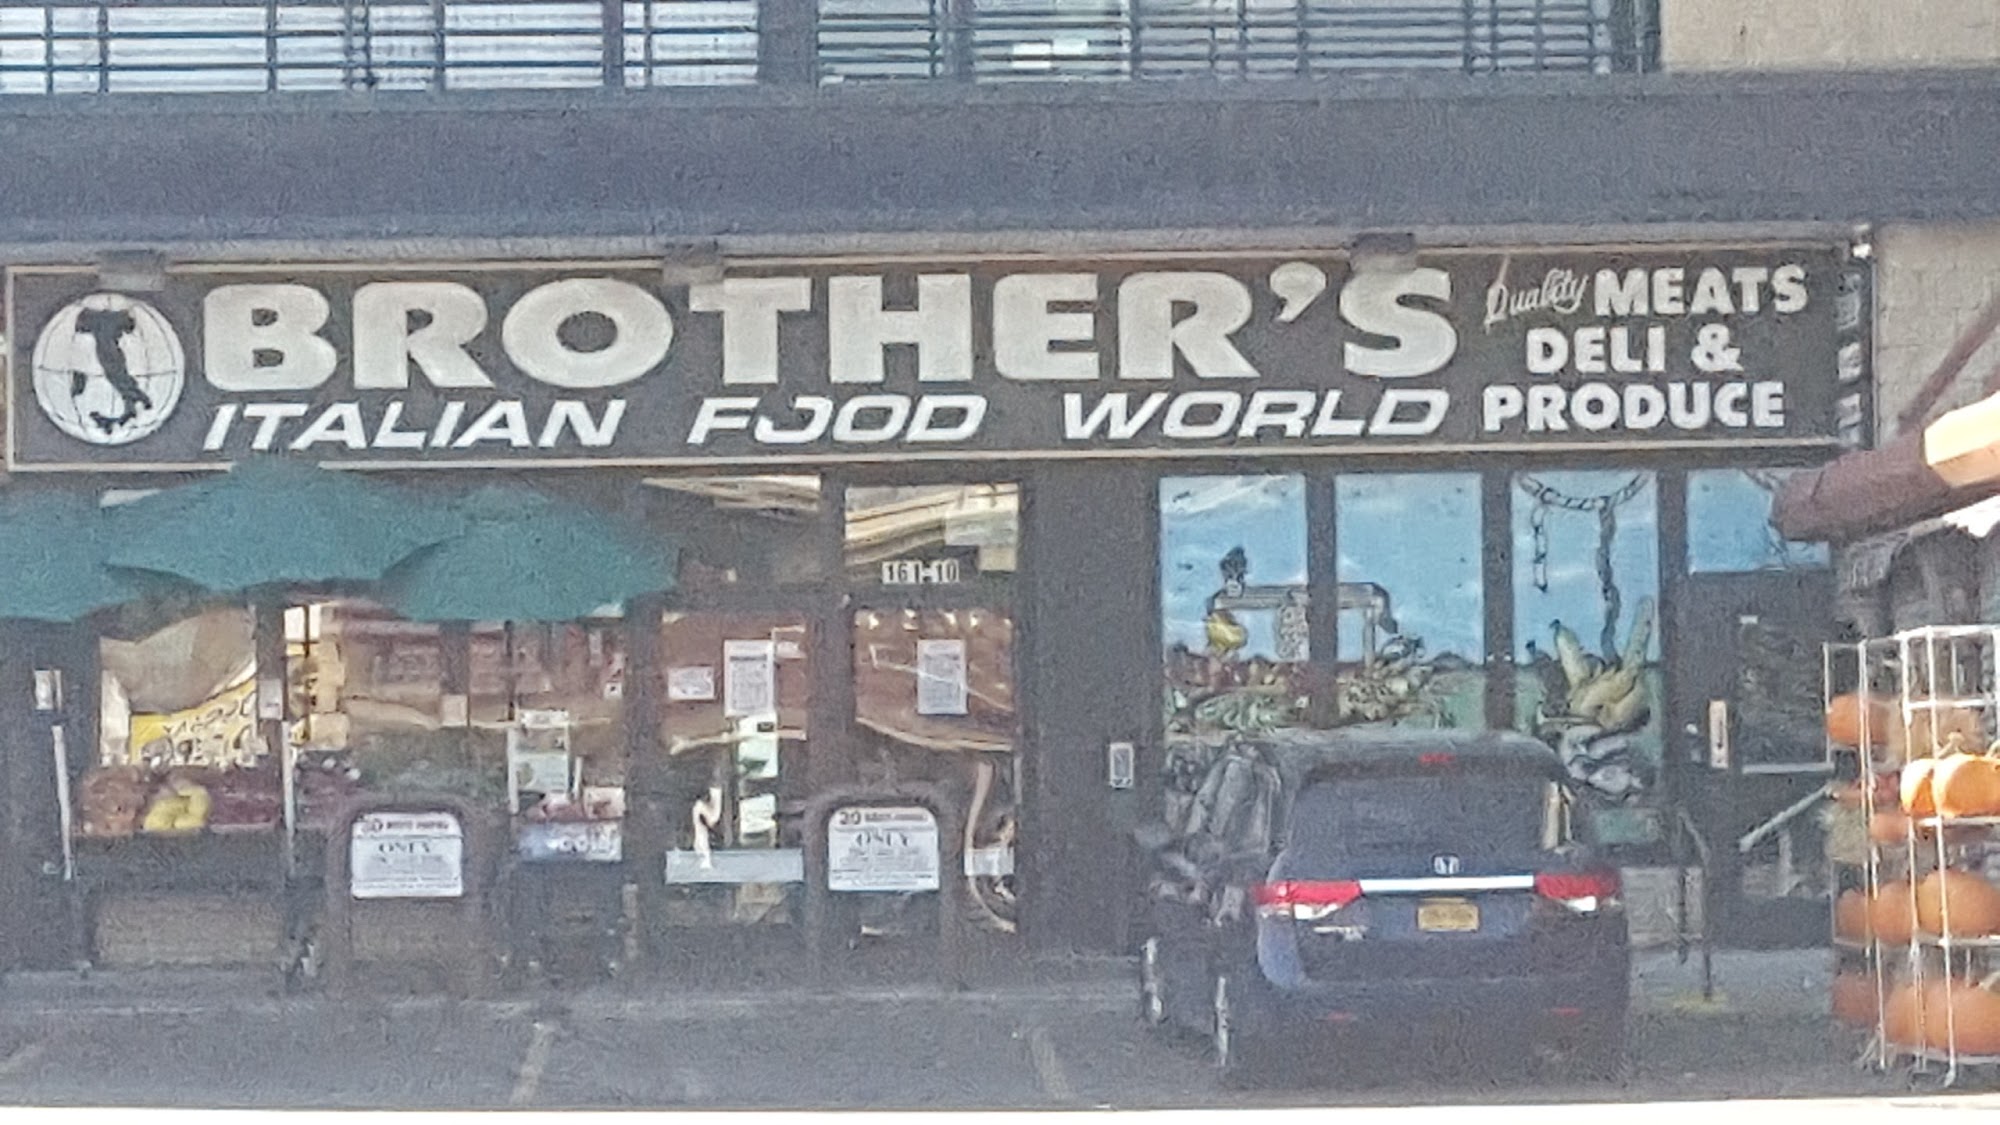 Brothers Italian Food World